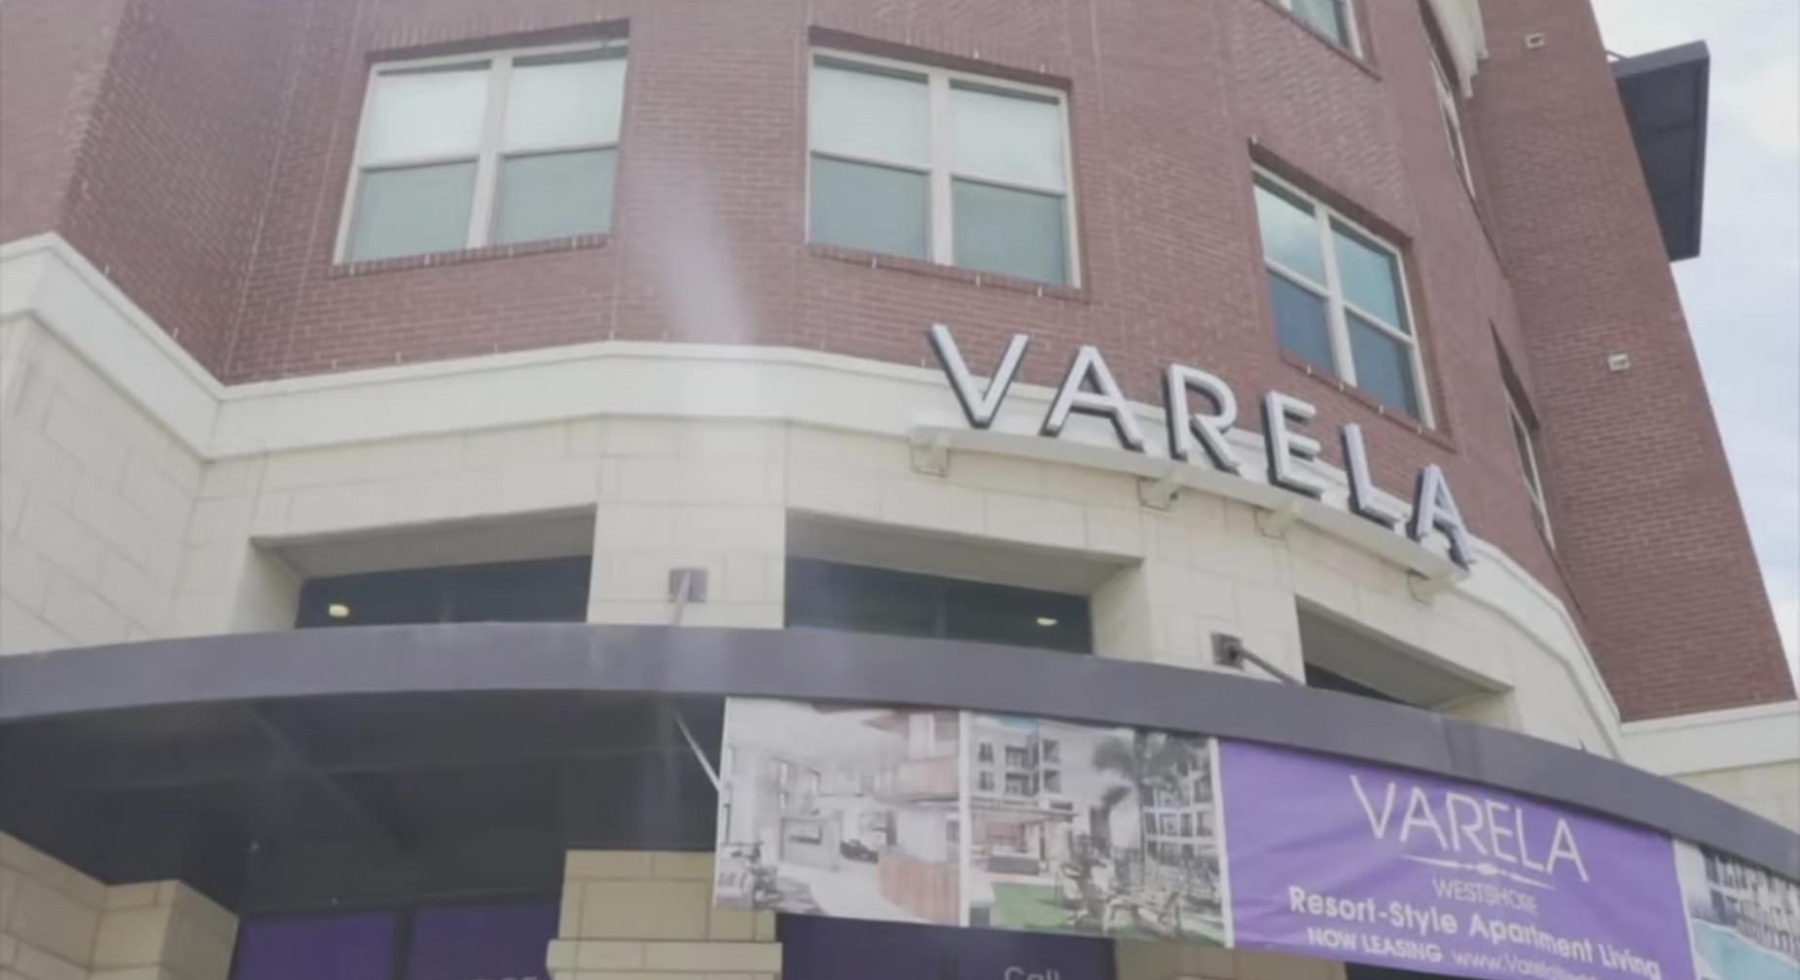 Varela Welcome Video